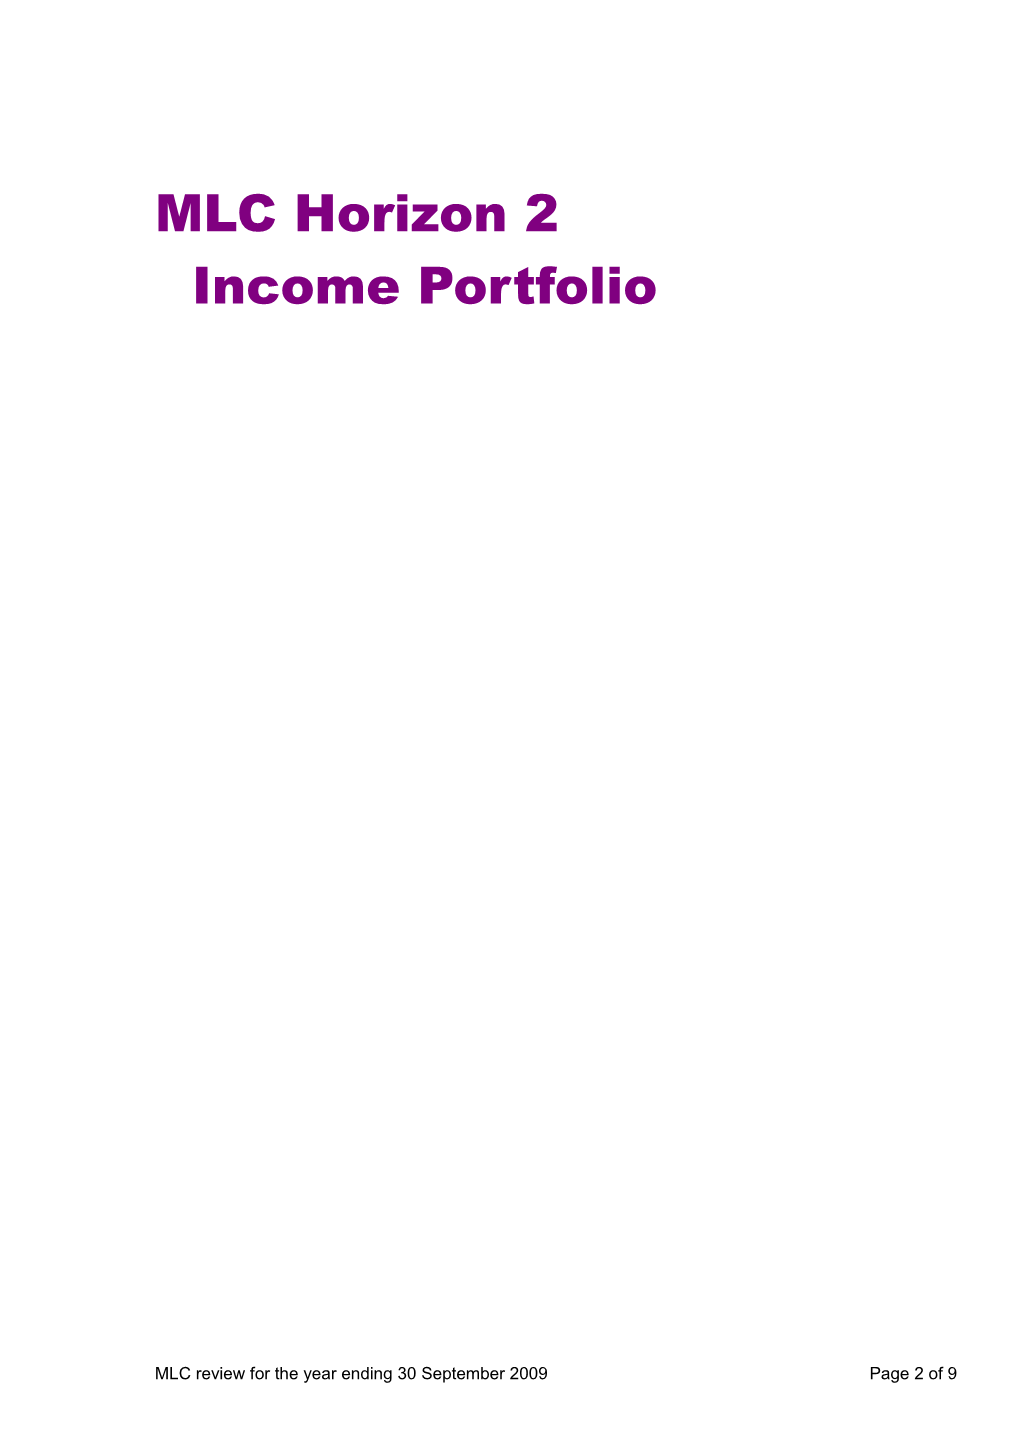 MLC Horizon 2 Income Portfolio